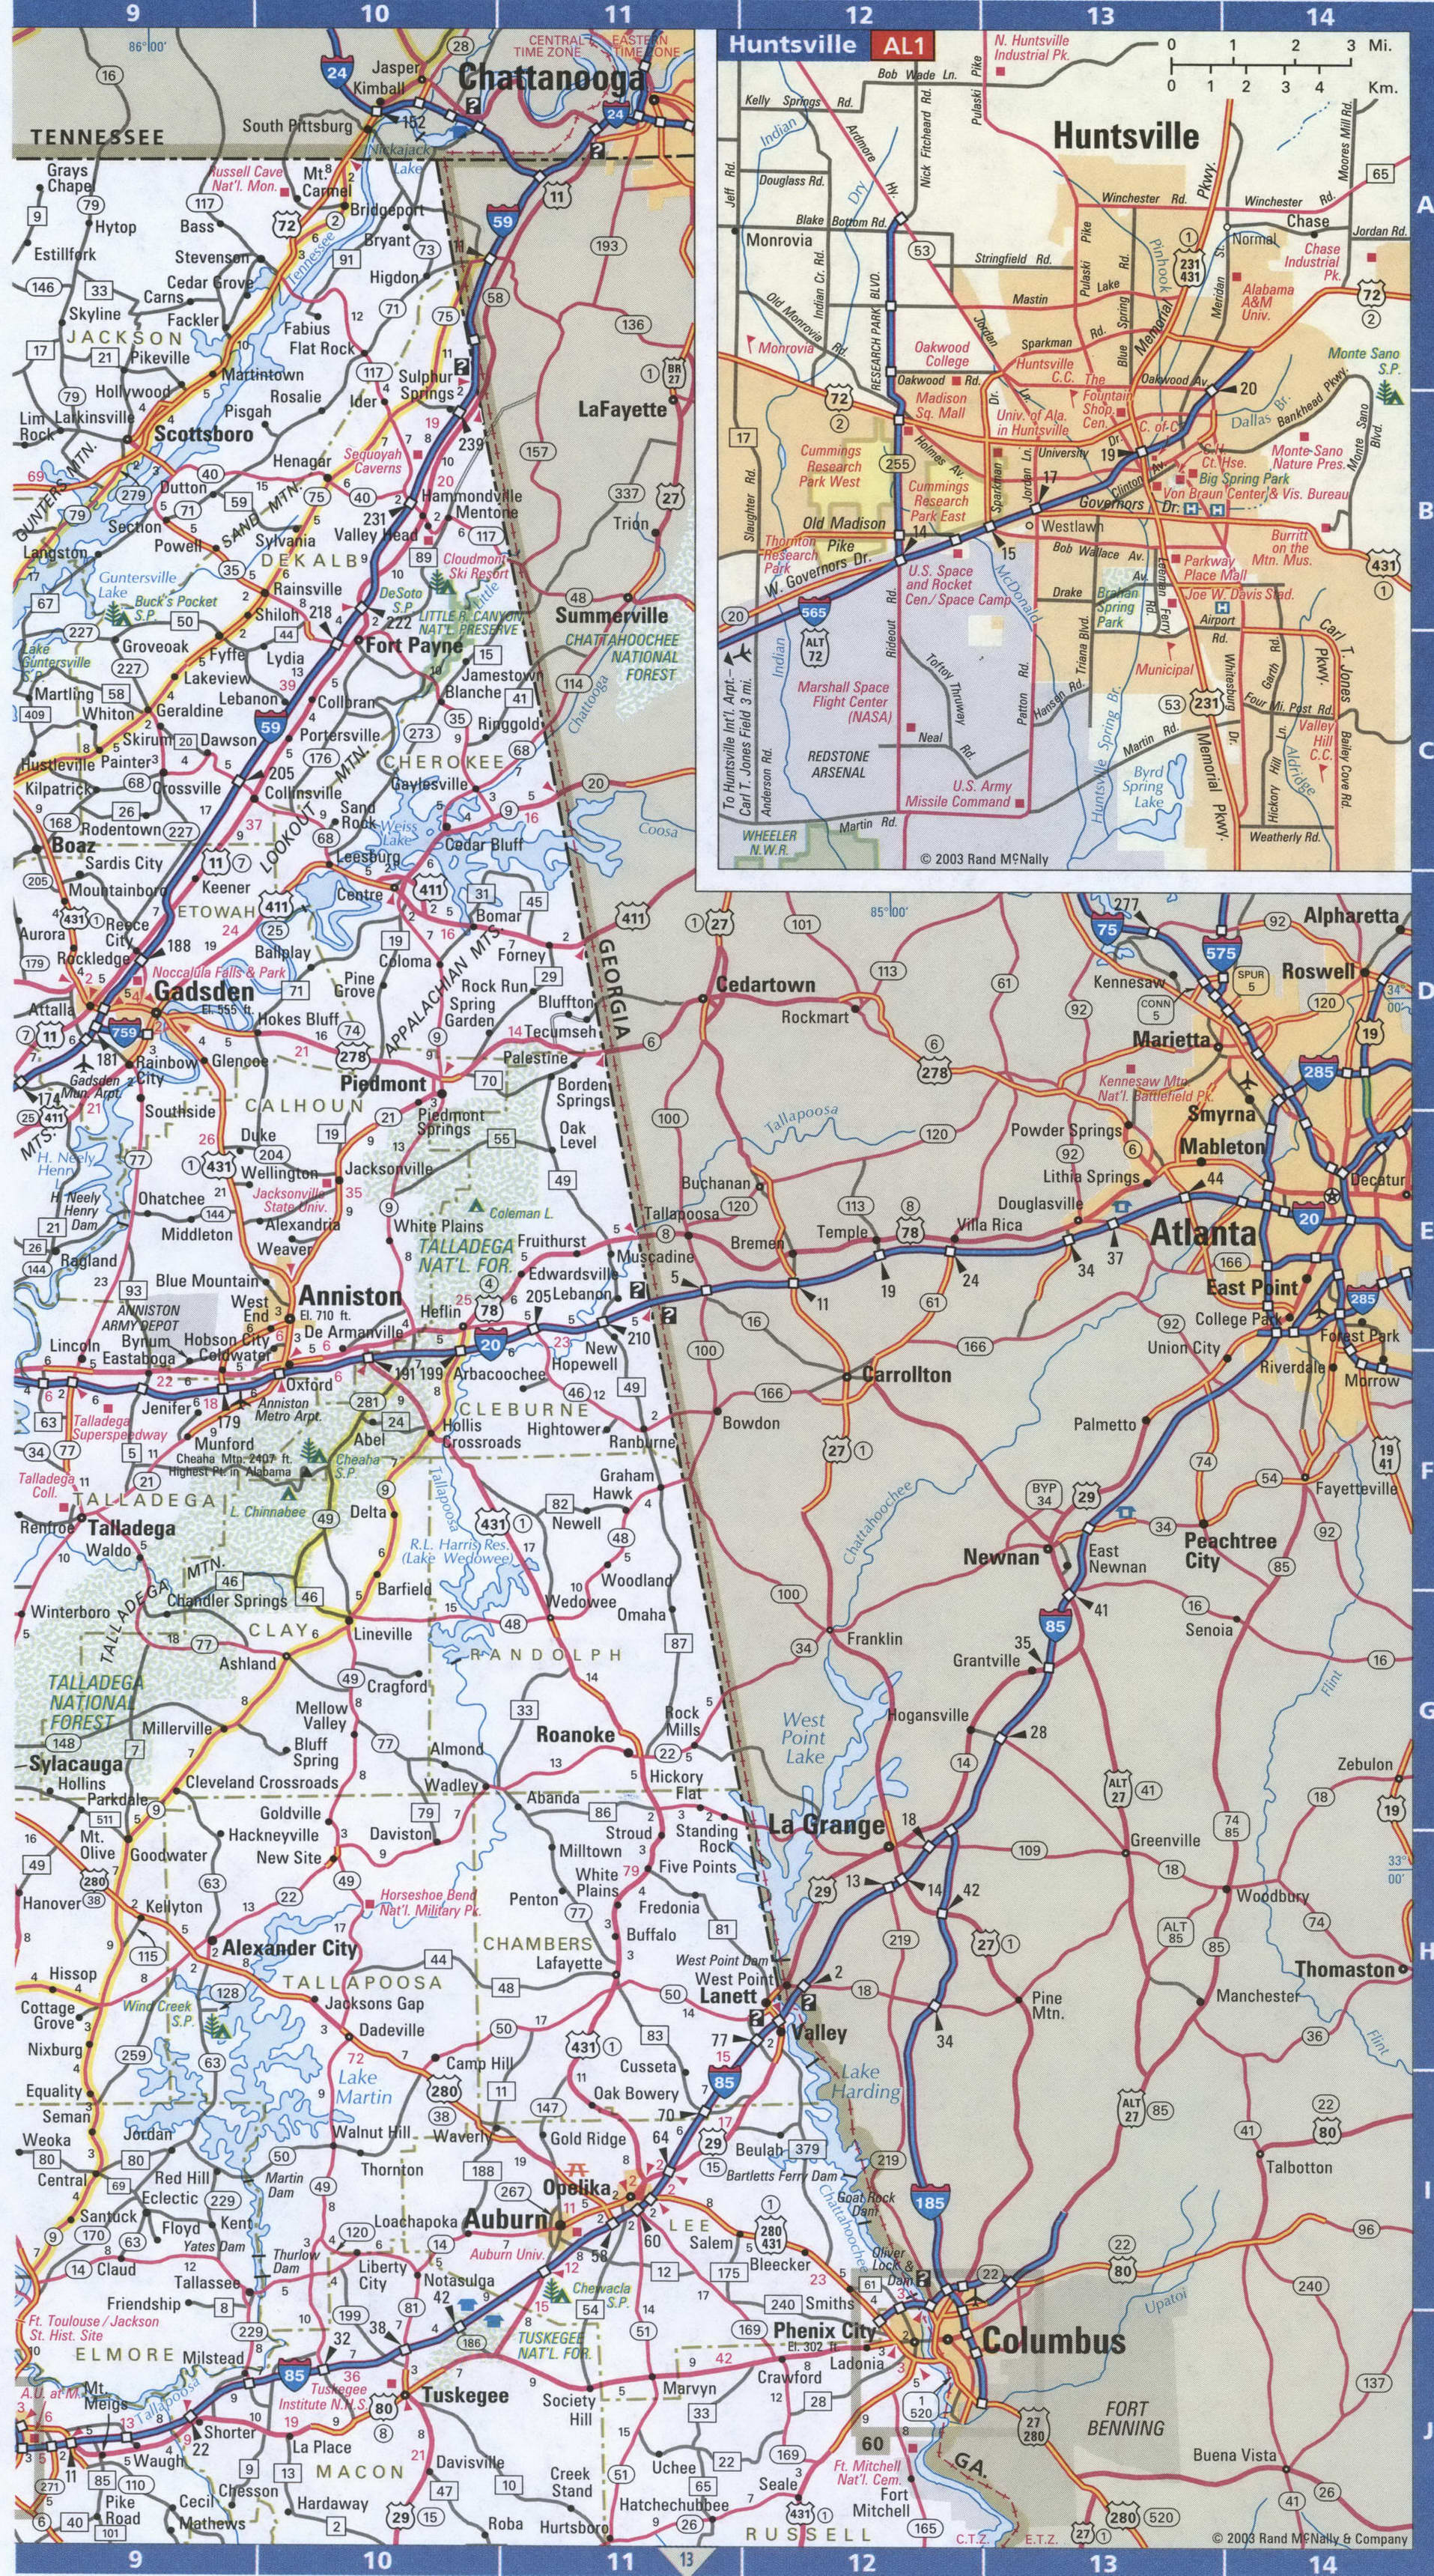 Northern Alabama detailed roads map